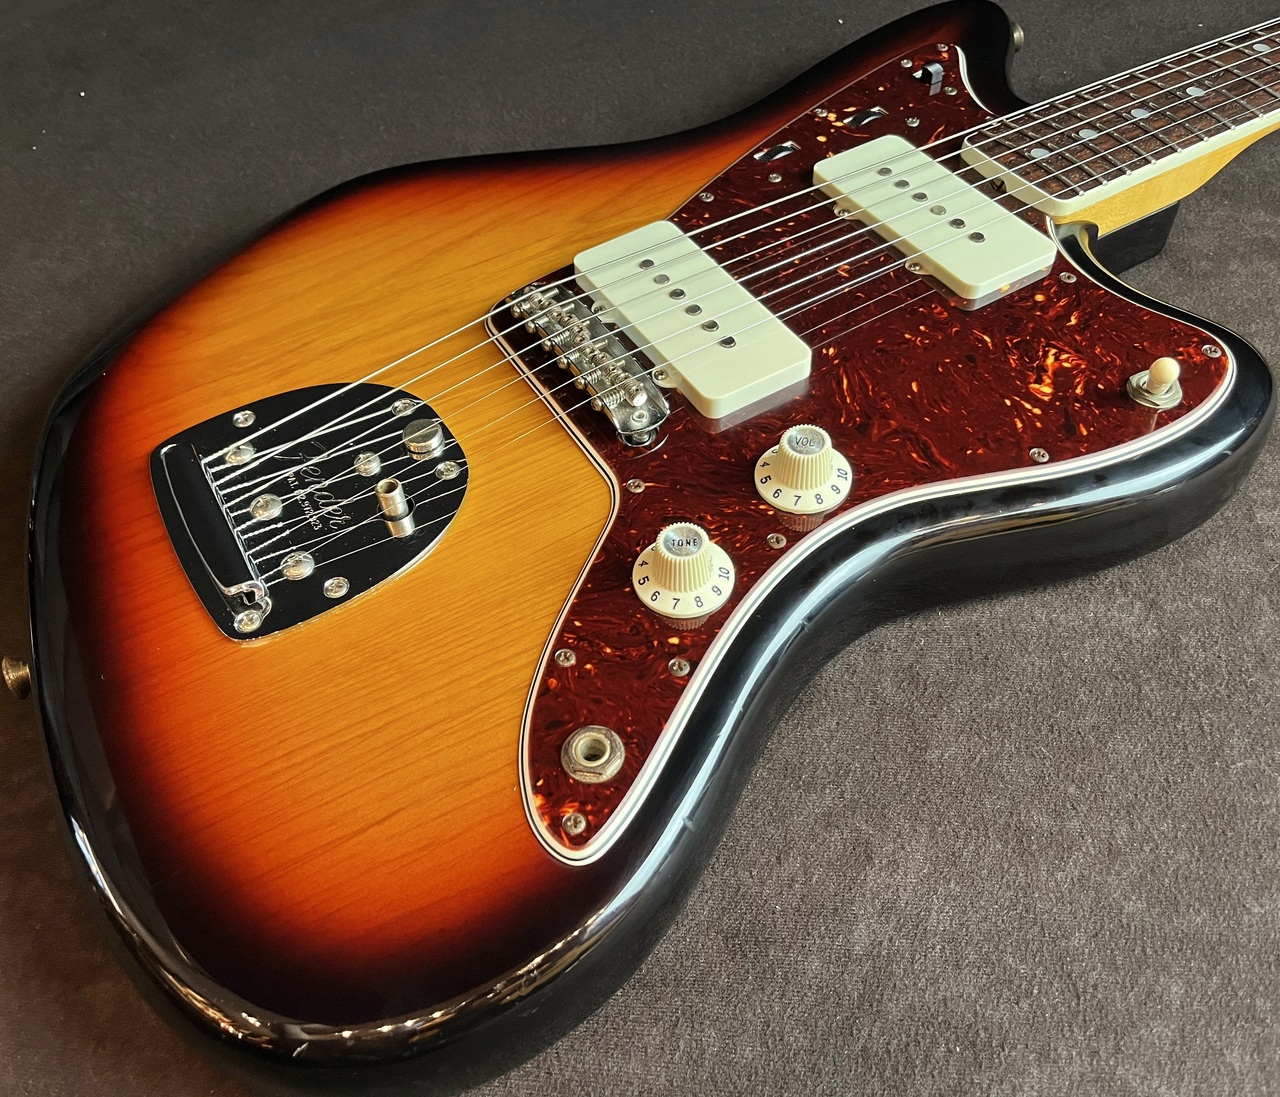 Fender American Original ‘60s Jazzmaster